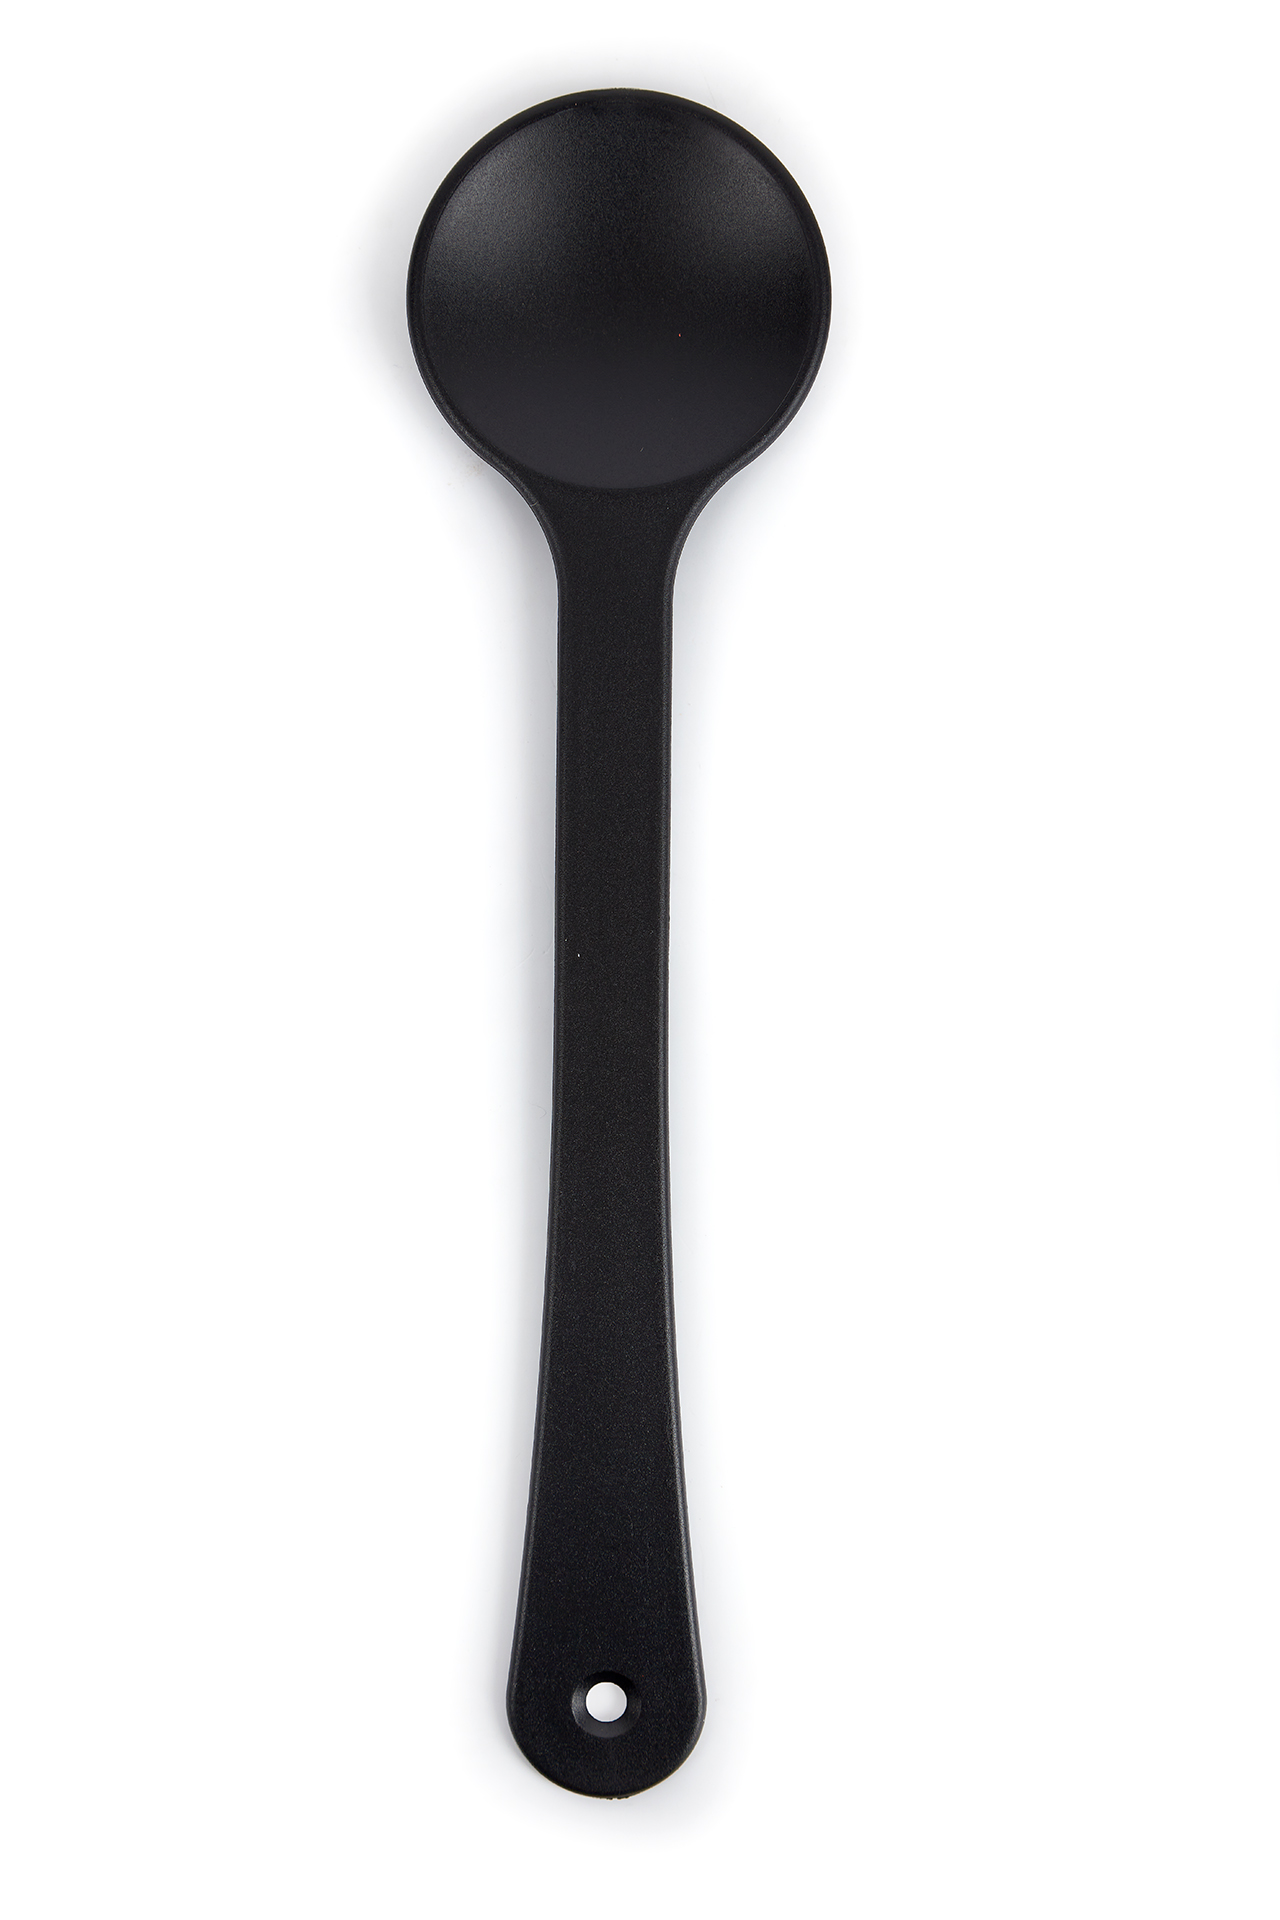 Black Spoon Occluder - Eyeline Optical NZ LTD | New Zealand's Largest ...